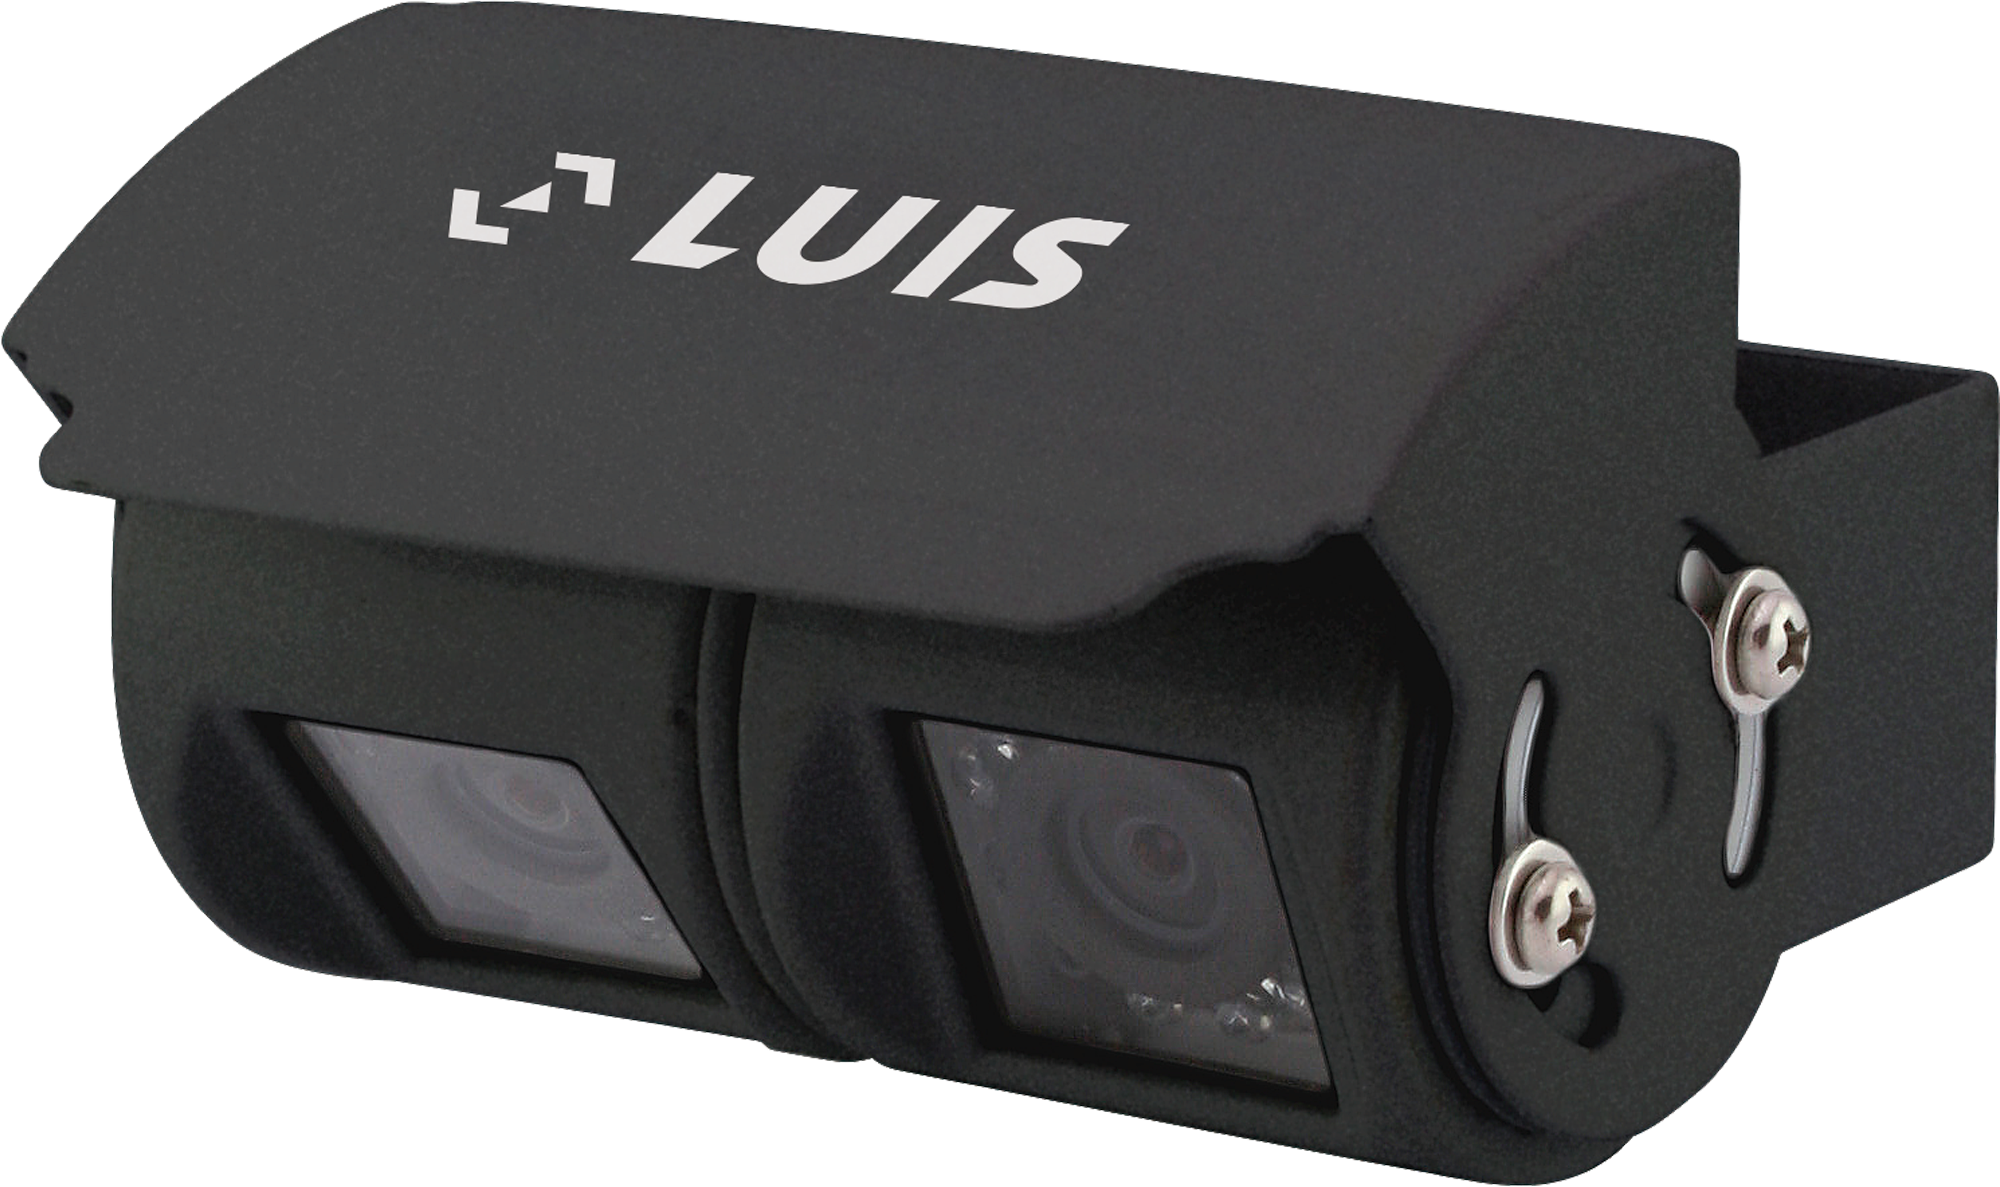 Luis Twin Professional Rückfahrsystem inkl. 7" Monitor 9 - 32 V schwarz